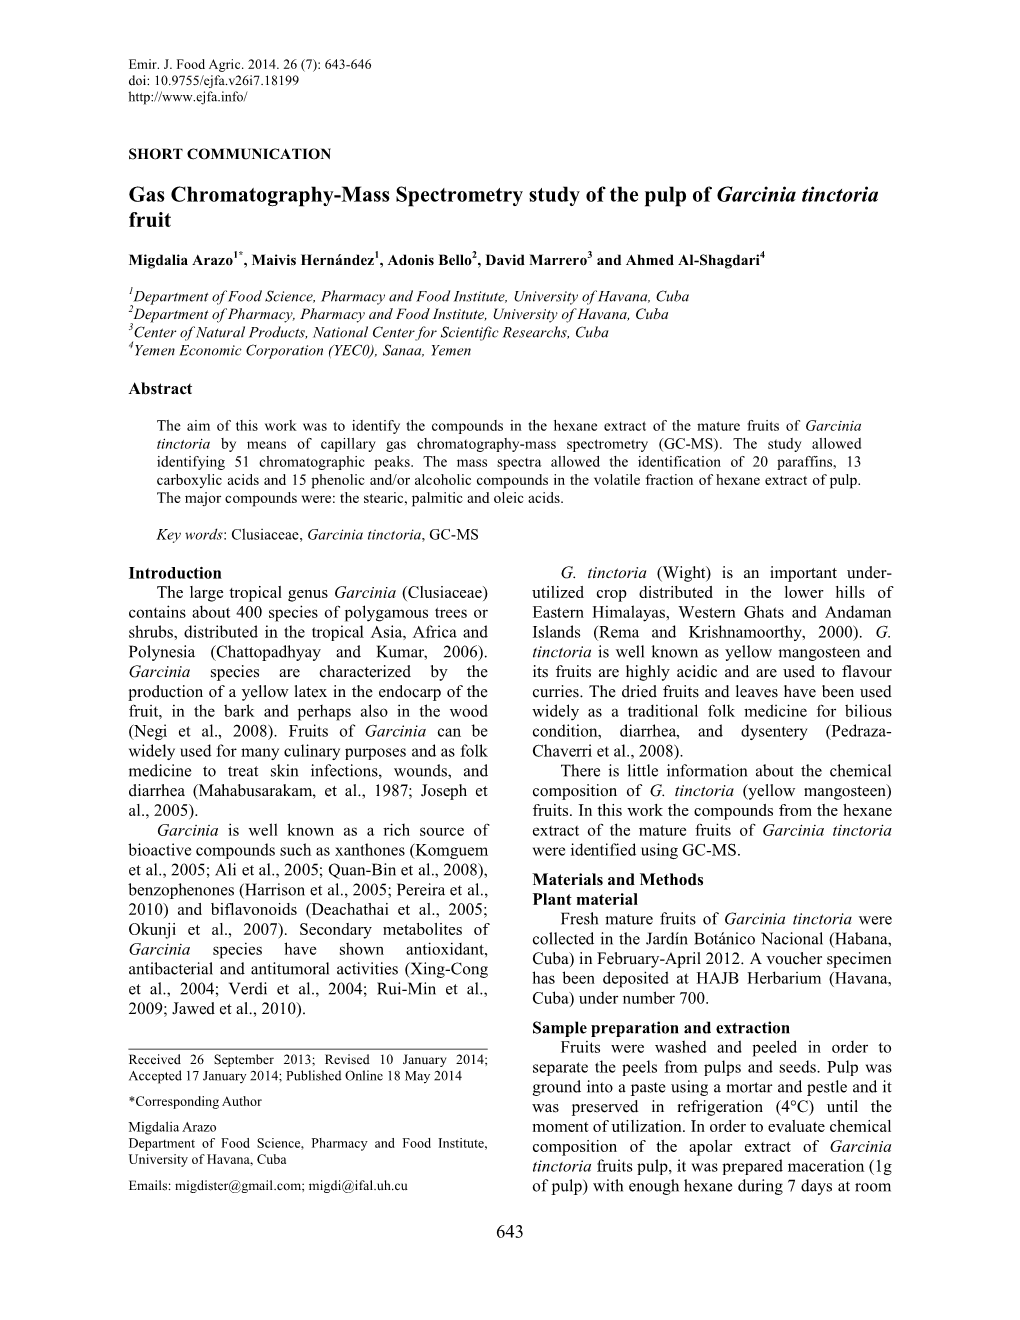 Gas Chromatography-Mass Spectrometry Study of the Pulp of Garcinia Tinctoria Fruit